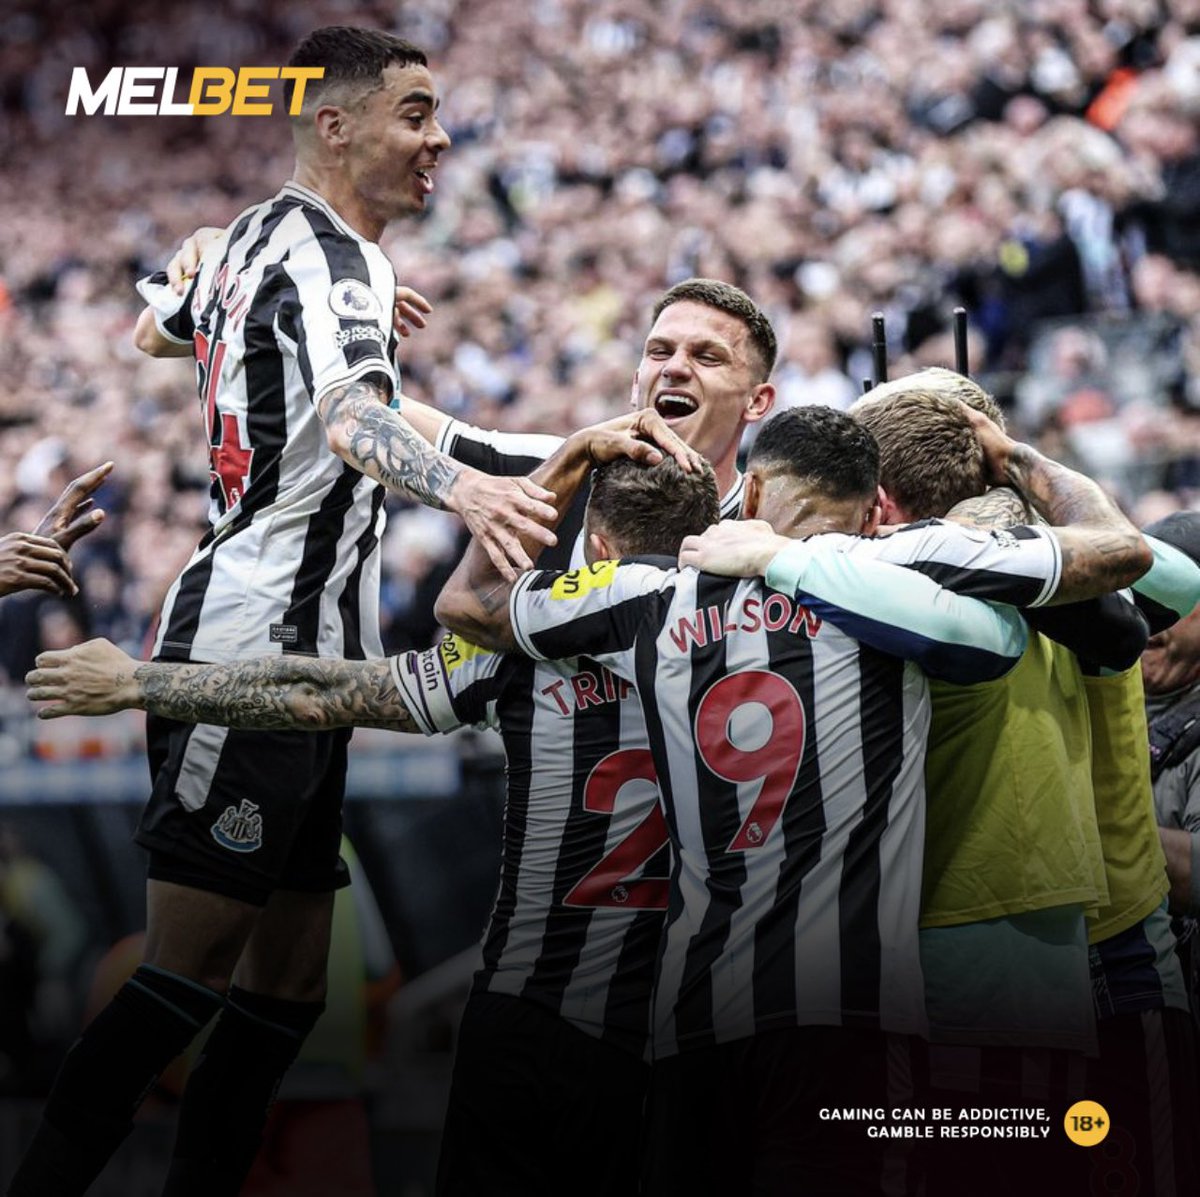 🤍🖤 Newcastle dreams of Champions League glory! 🤩
#Newcastle #ChampionsLeague #FootballDreams #Melbet